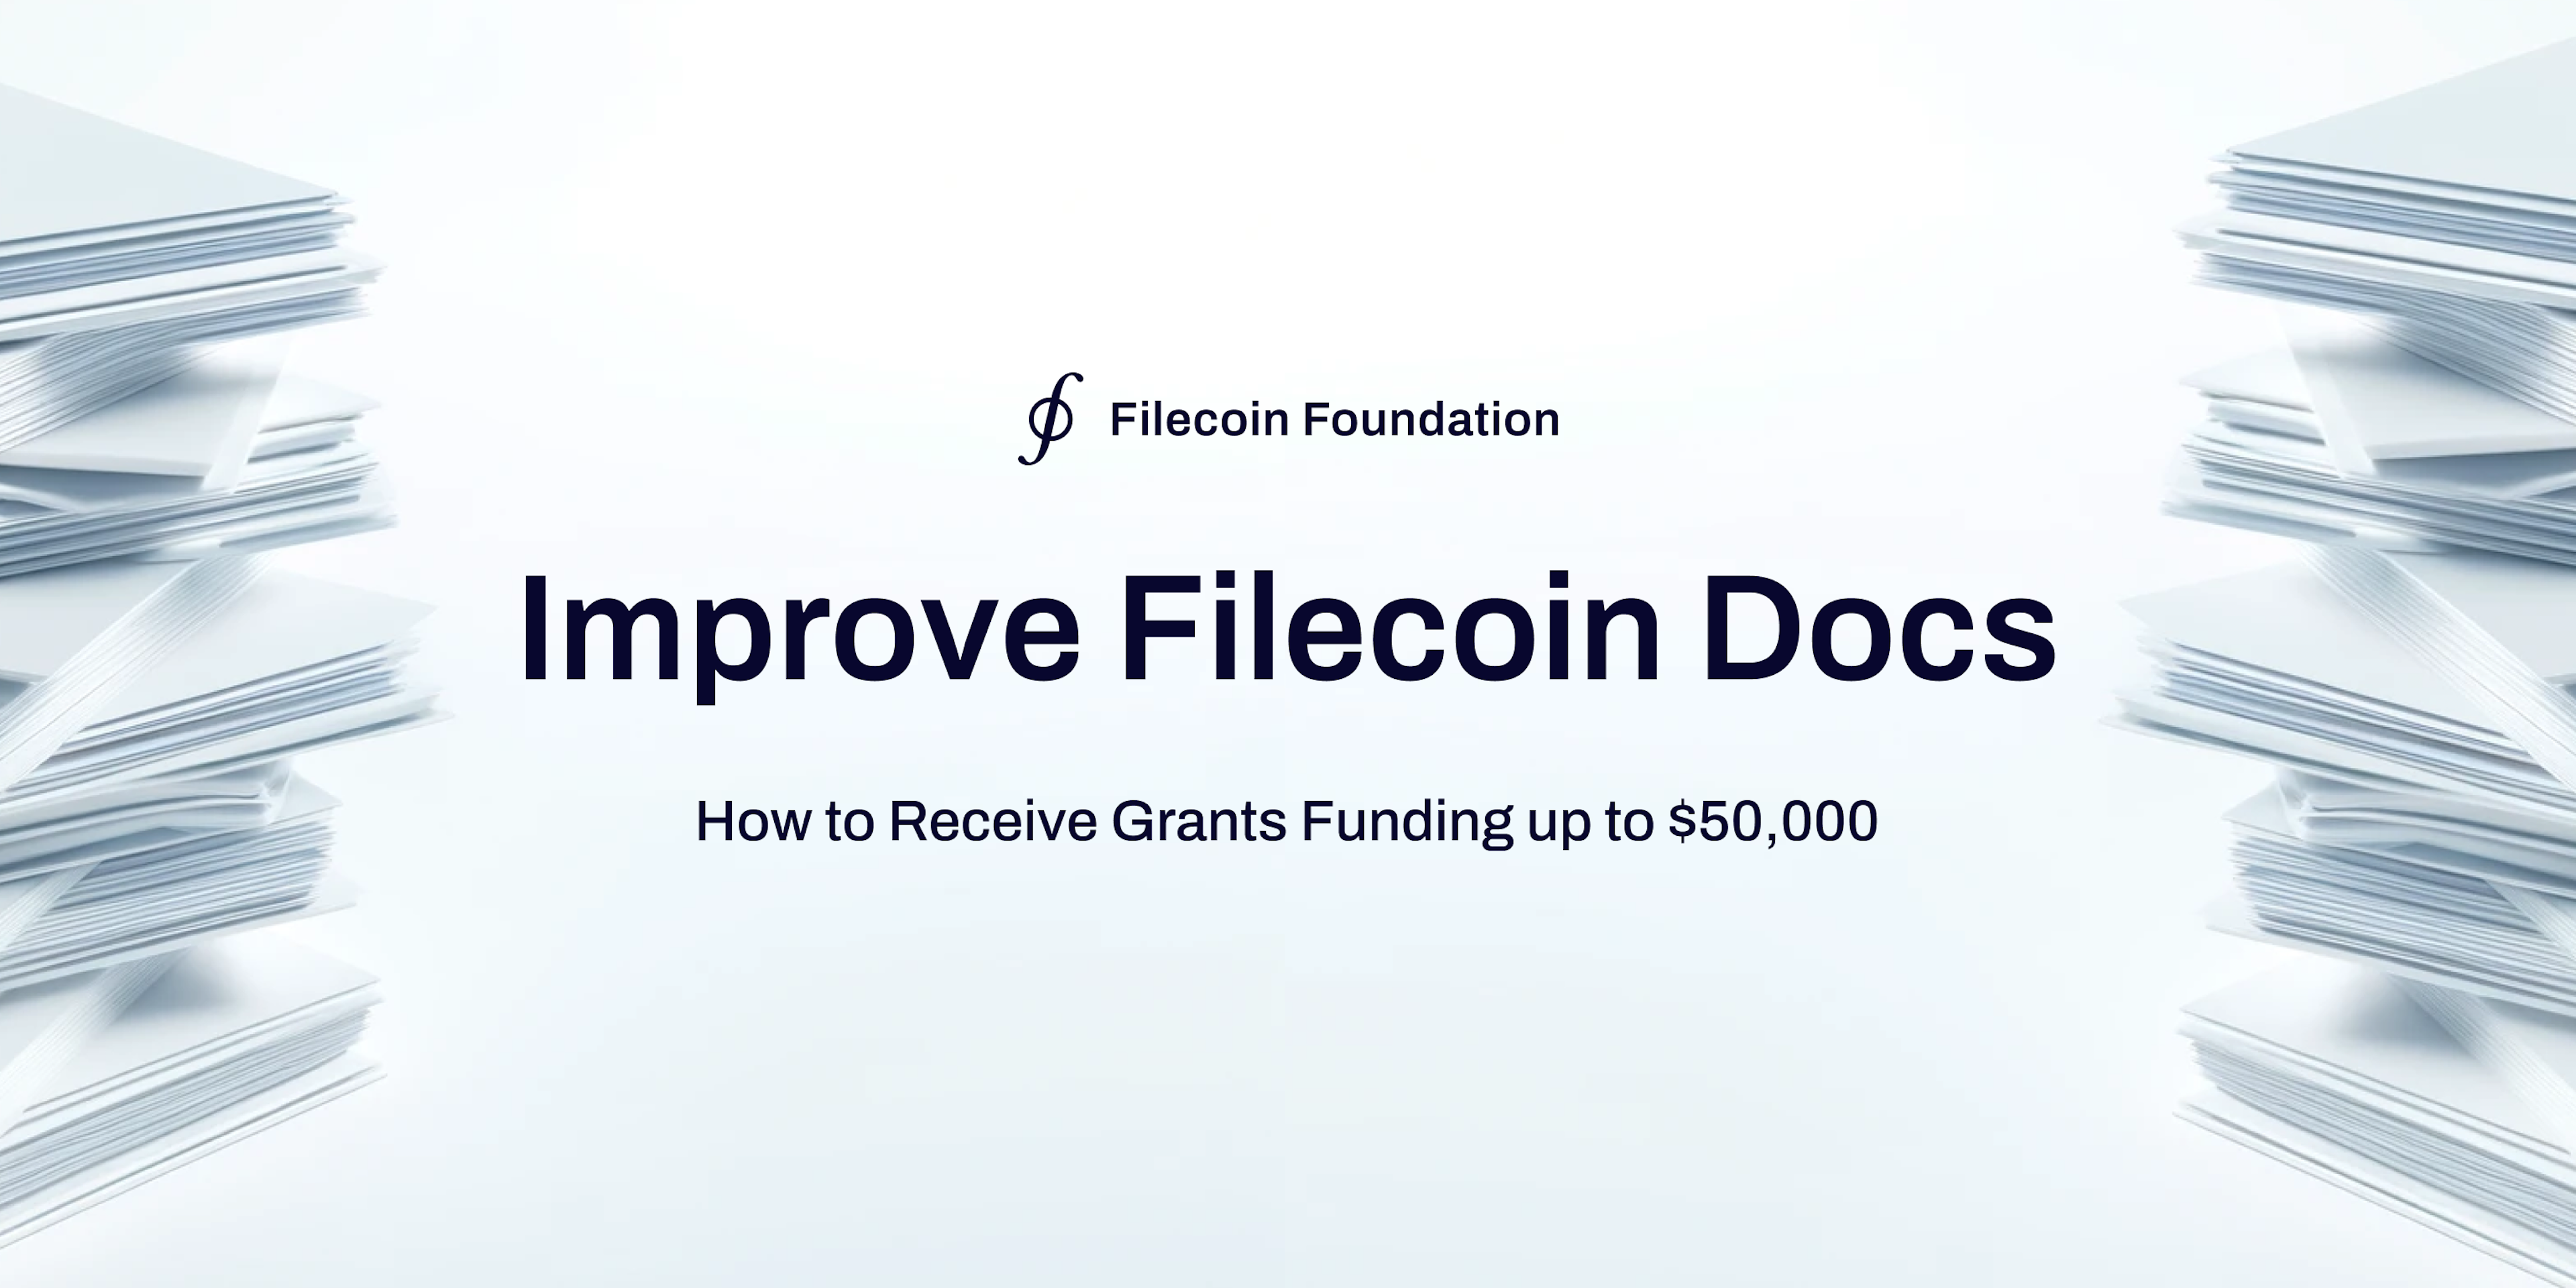 Filecoin Foundation Documentation Grants